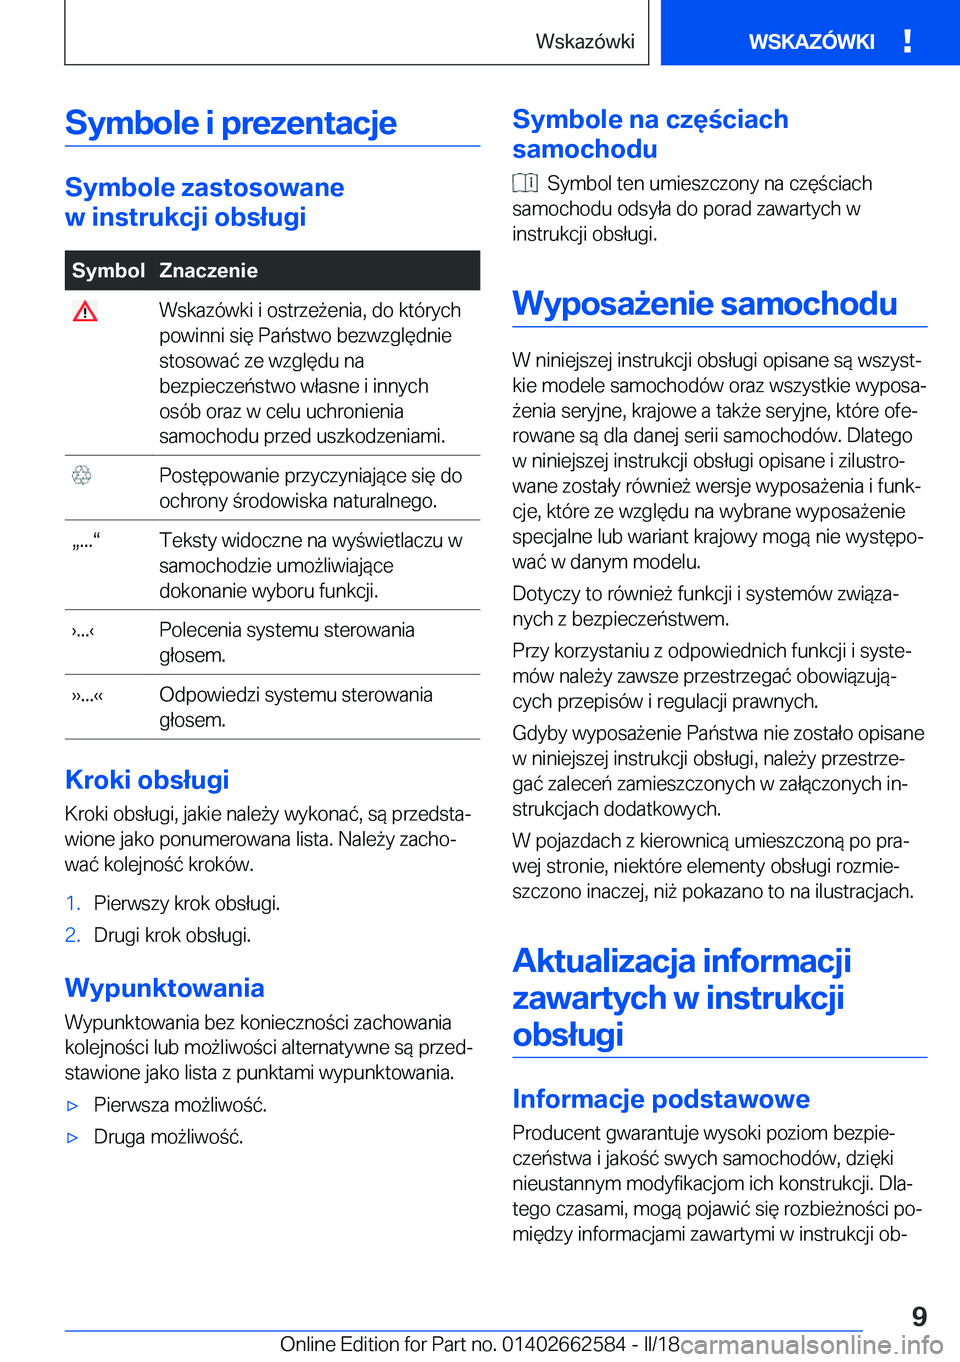 BMW M2 2018  Instrukcja obsługi (in Polish) �S�y�m�b�o�l�e��i��p�r�e�z�e�n�t�a�c�j�e
�S�y�m�b�o�l�e��z�a�s�t�o�s�o�w�a�n�e
�w��i�n�s�t�r�u�k�c�j�i��o�b�s�ł�u�g�i
�S�y�m�b�o�l�Z�n�a�c�z�e�n�i�e� �W�s�k�a�z�